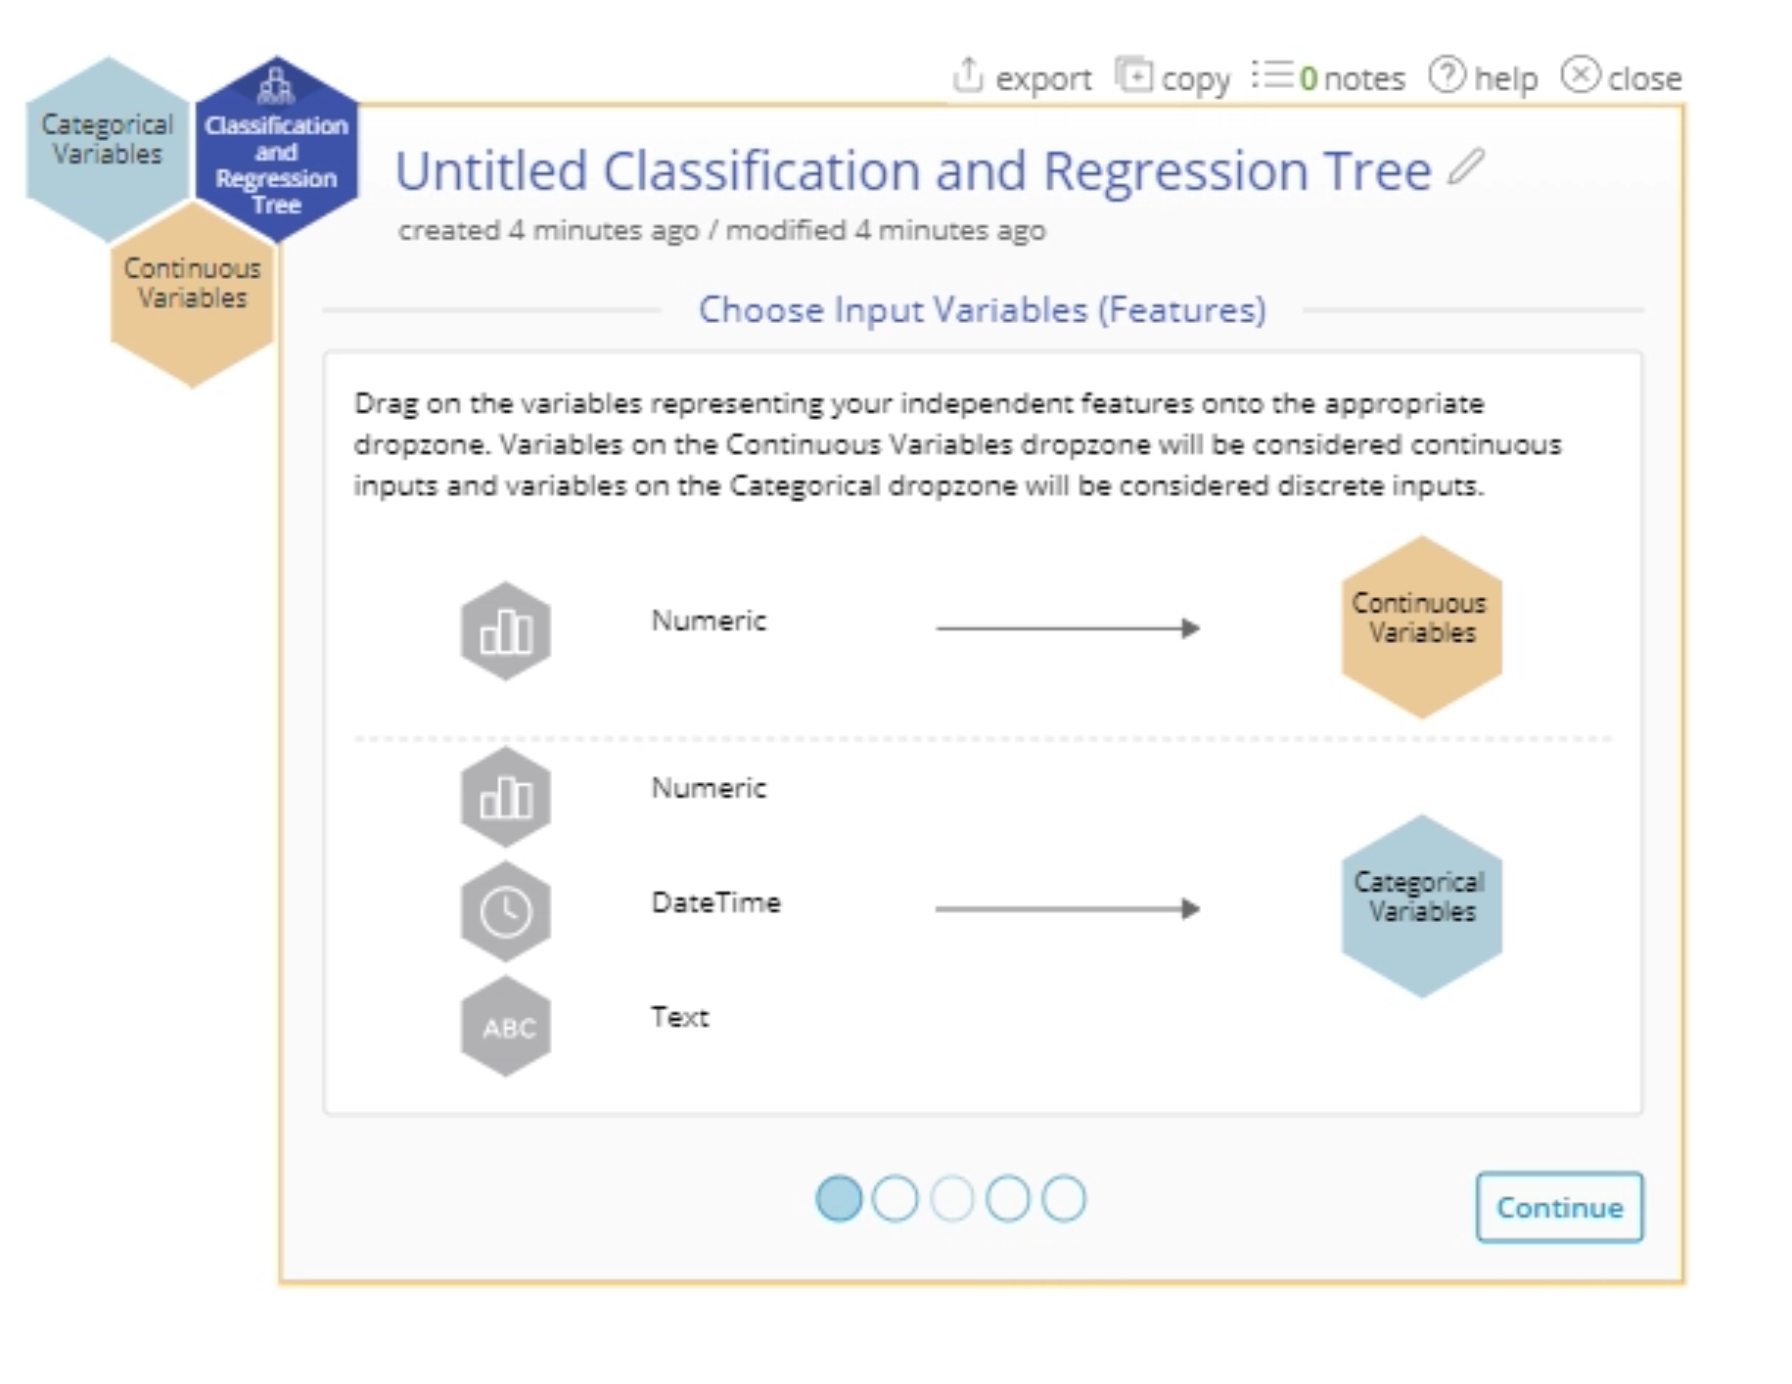 Classification and regression tree start up menu.